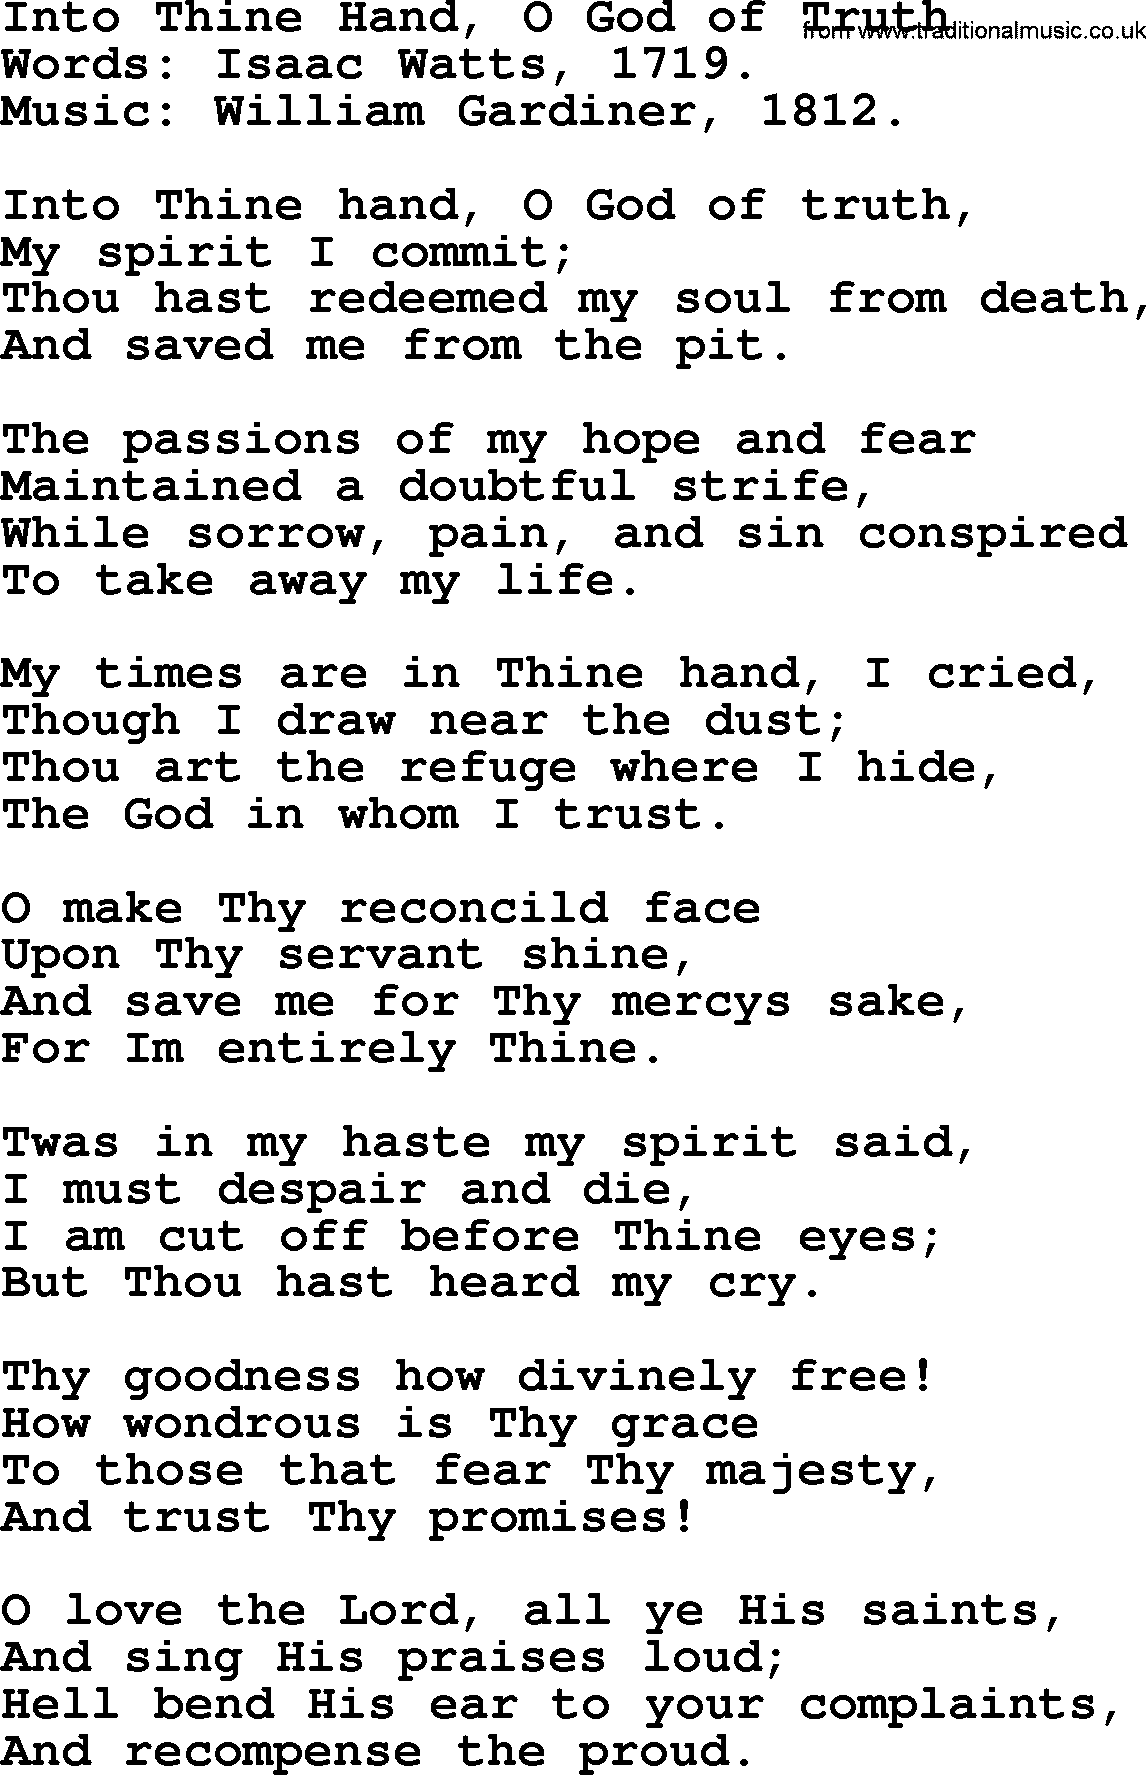 Isaac Watts Christian hymn: Into Thine Hand, O God of Truth- lyricss